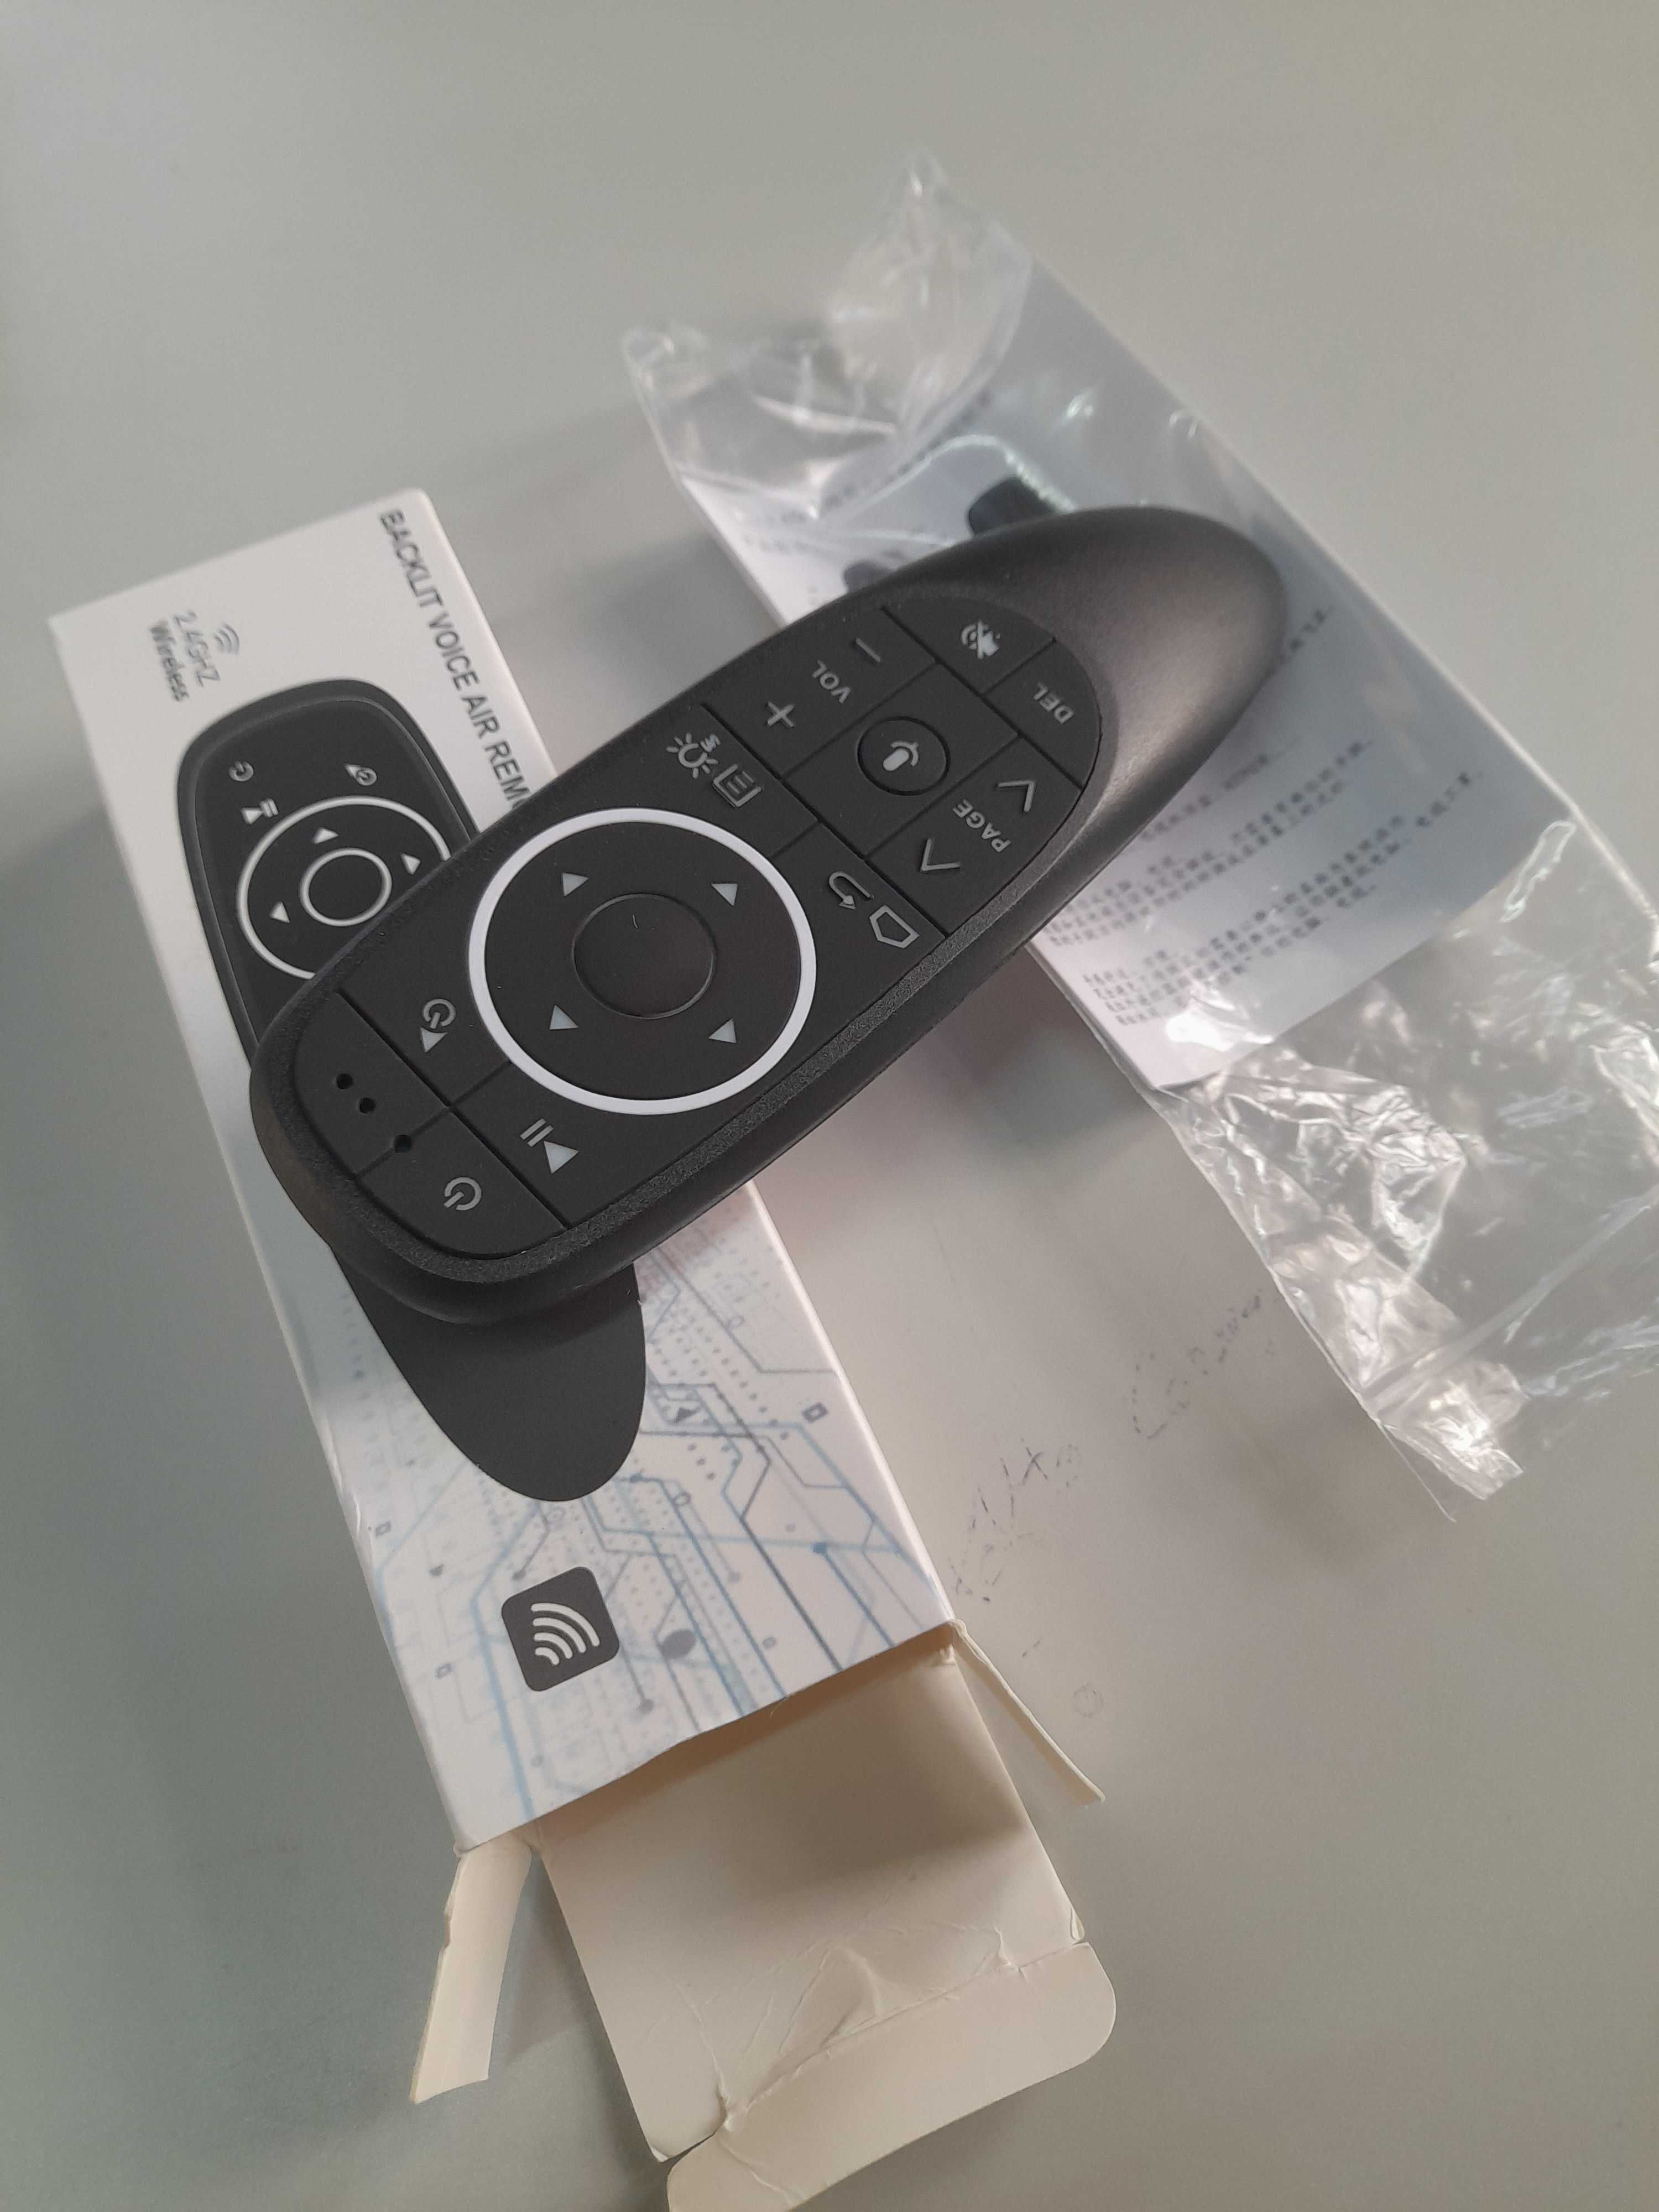 Mini air mouse controle remoto G10s Pro para android, PC, TV Box